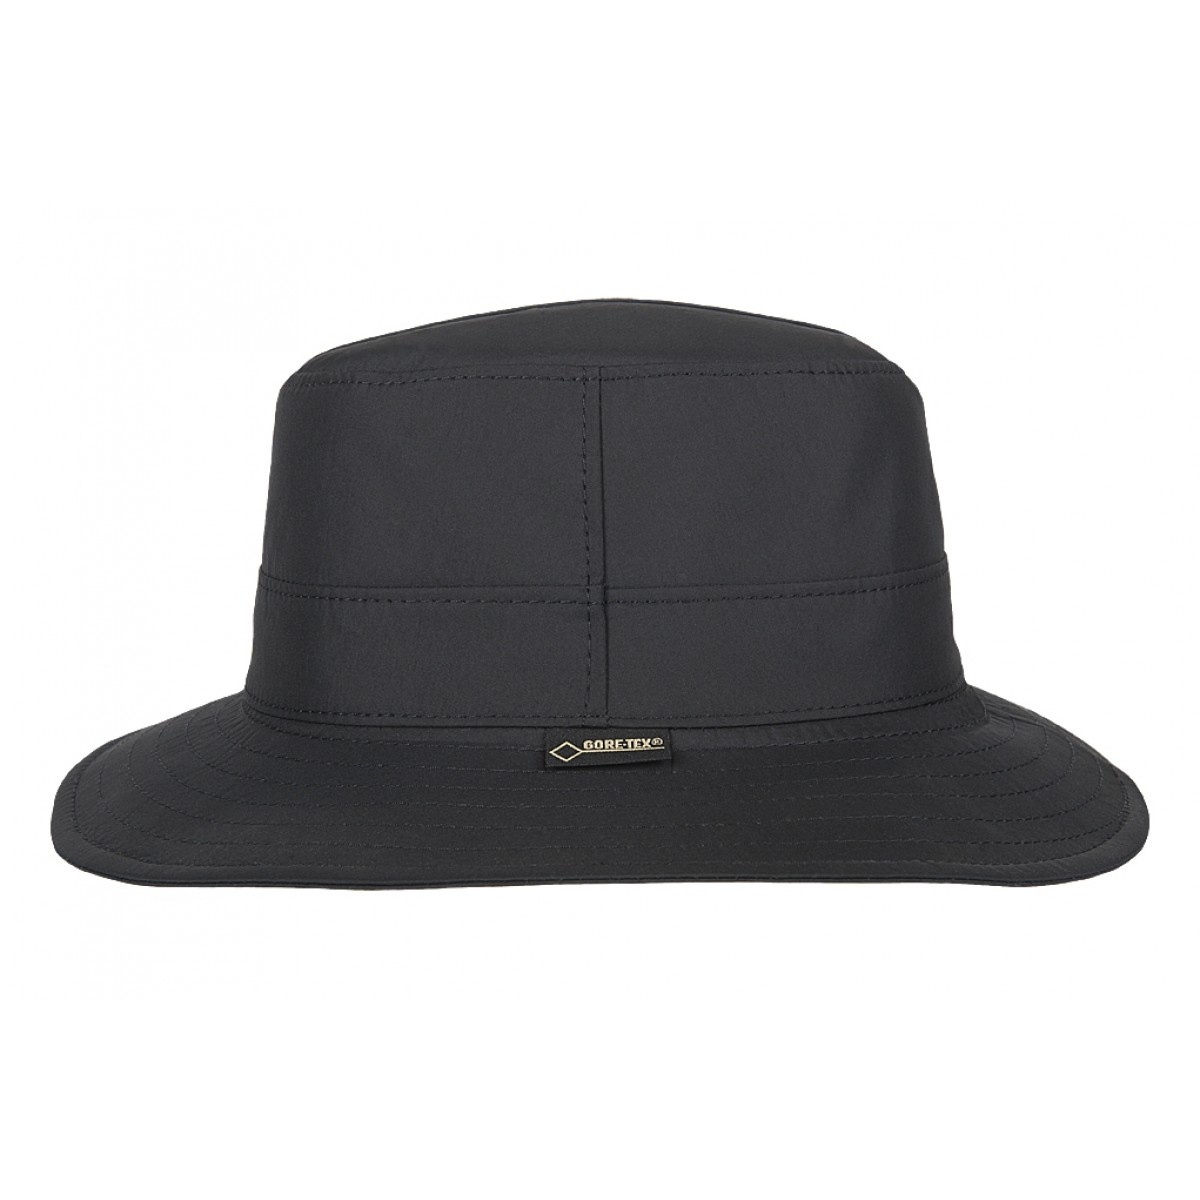 Hat Hatland Hat